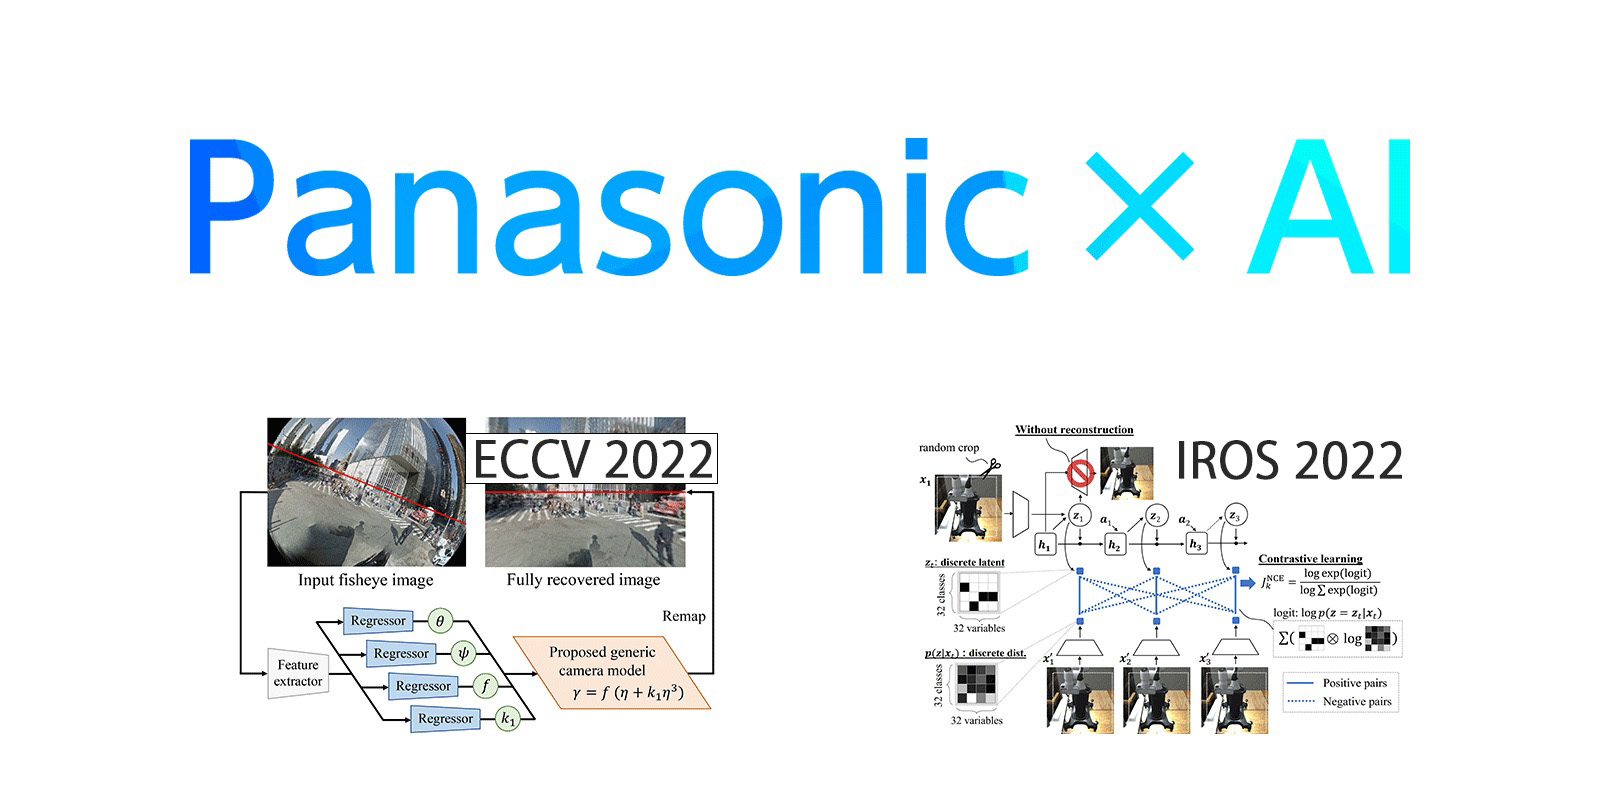 image:Panasonic x AI